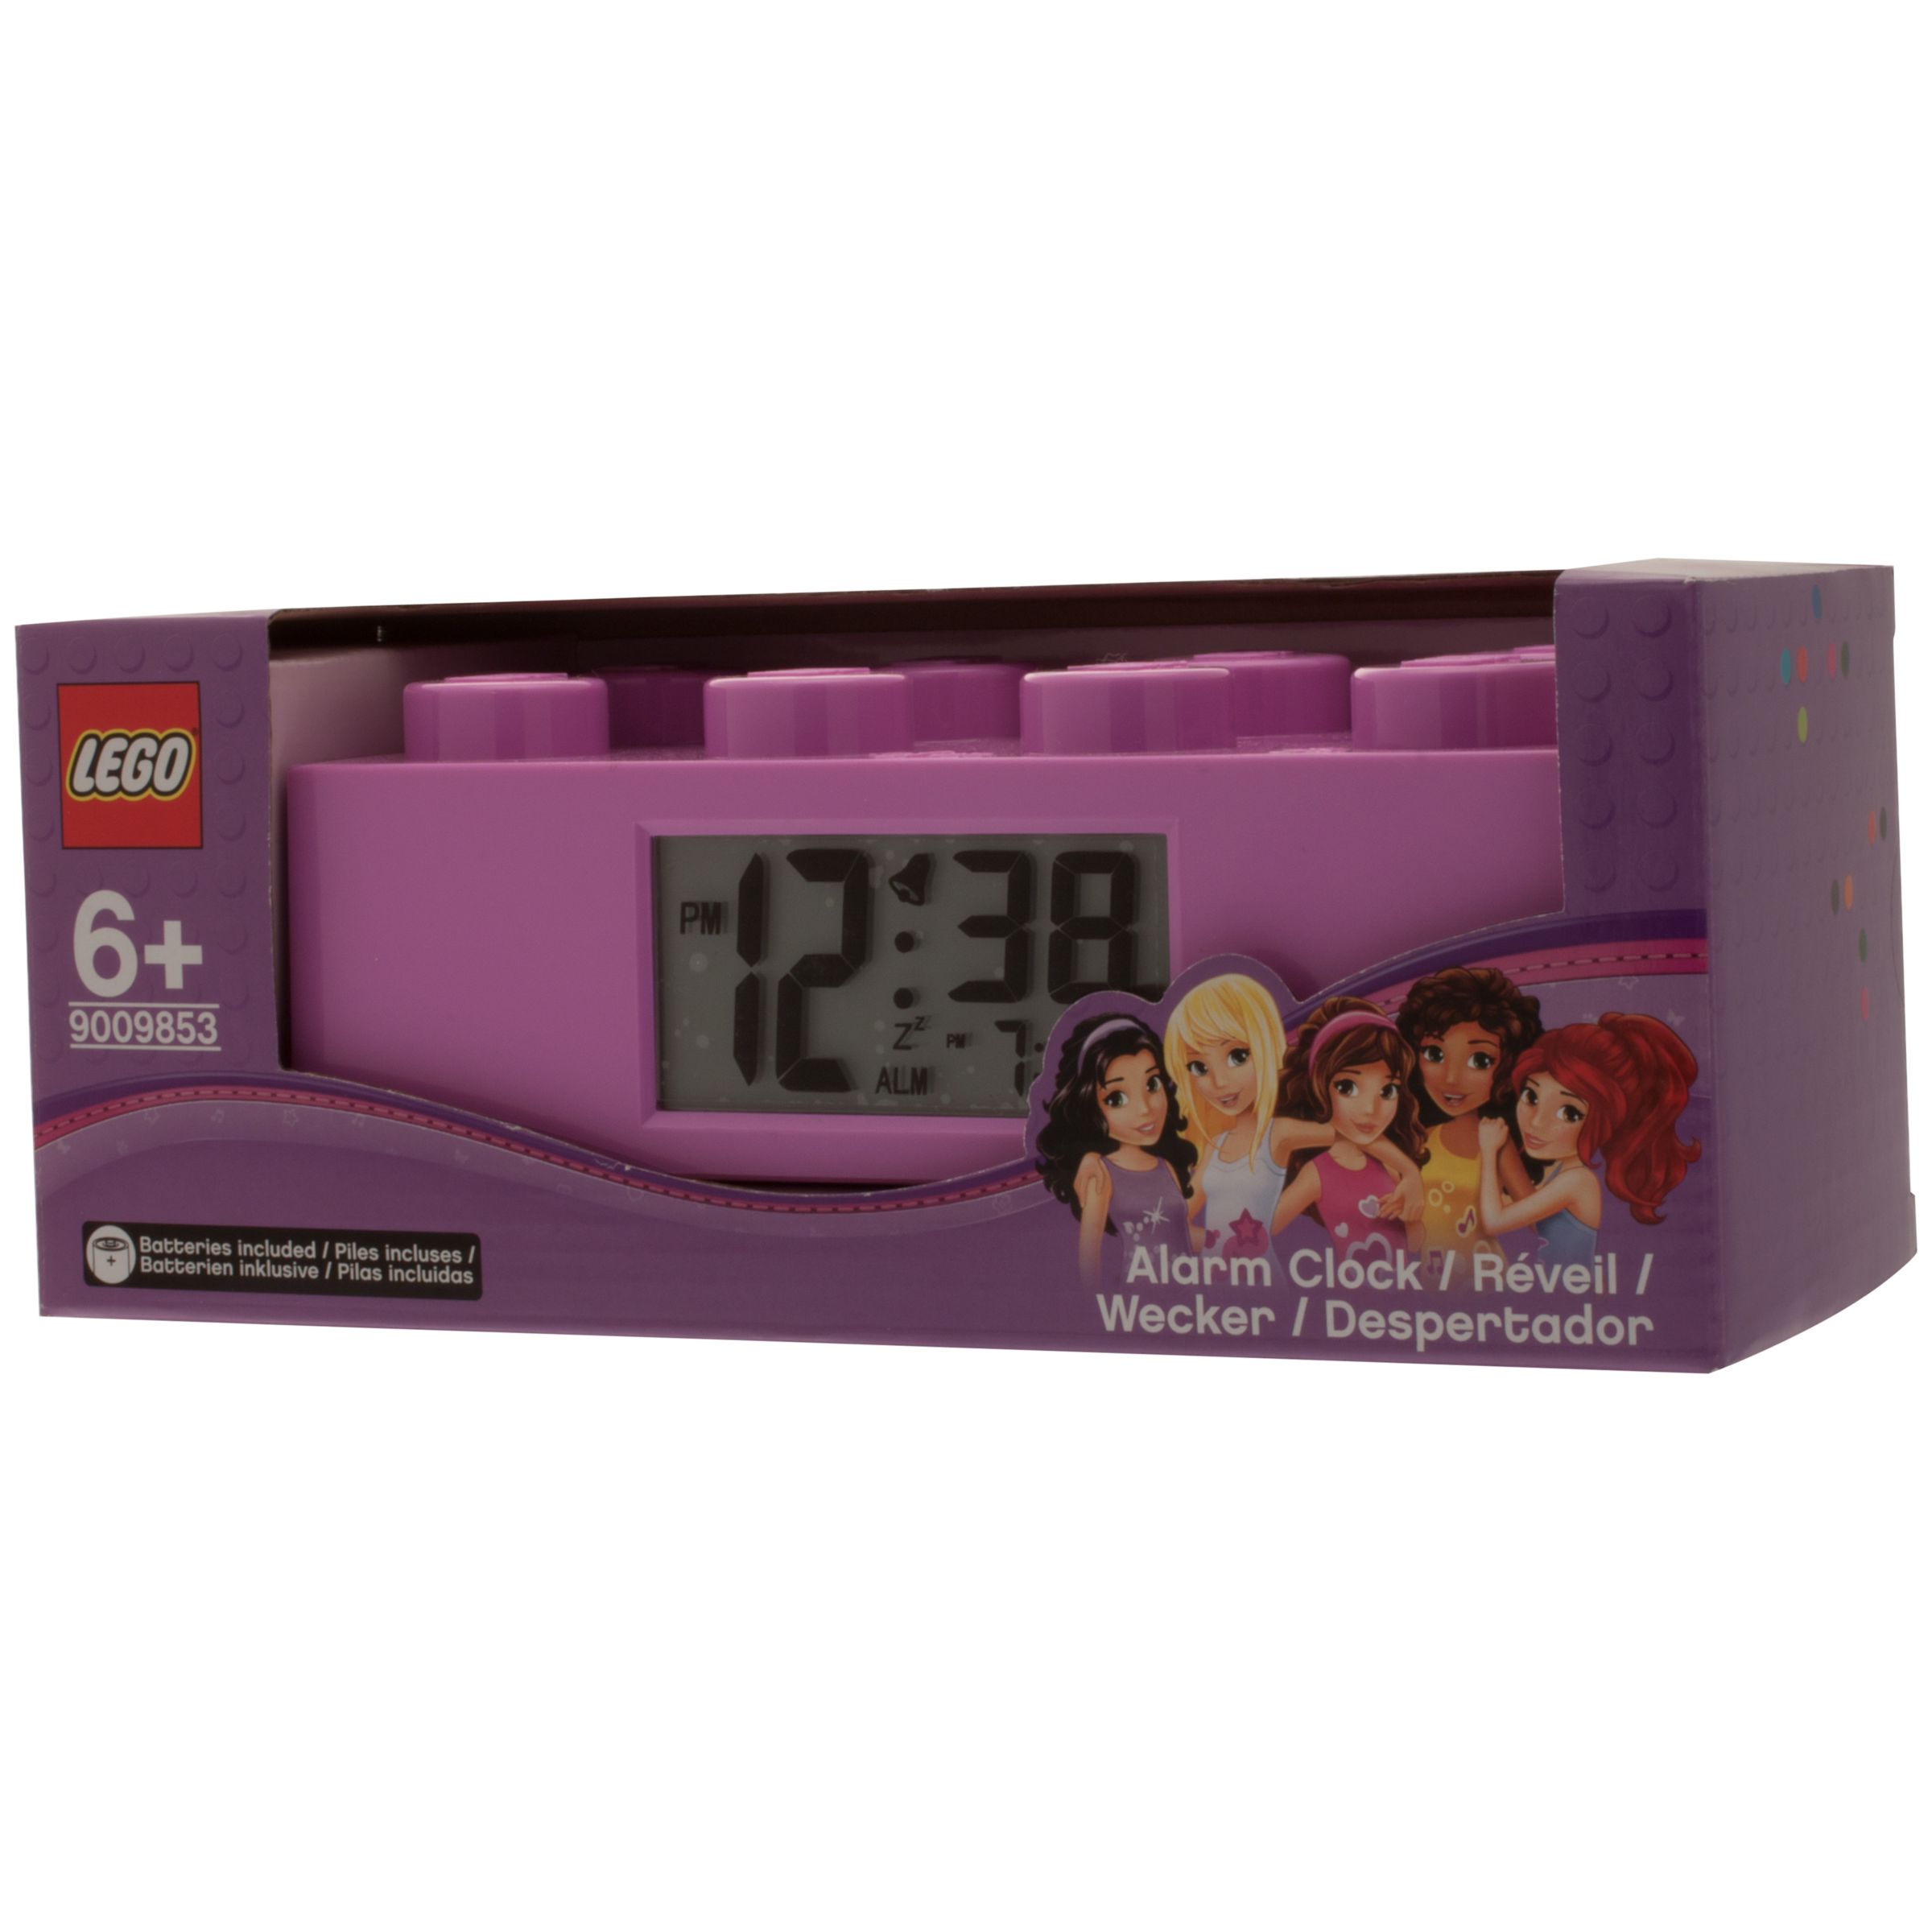 LEGO Friends 9009853 Brick Alarm Clock